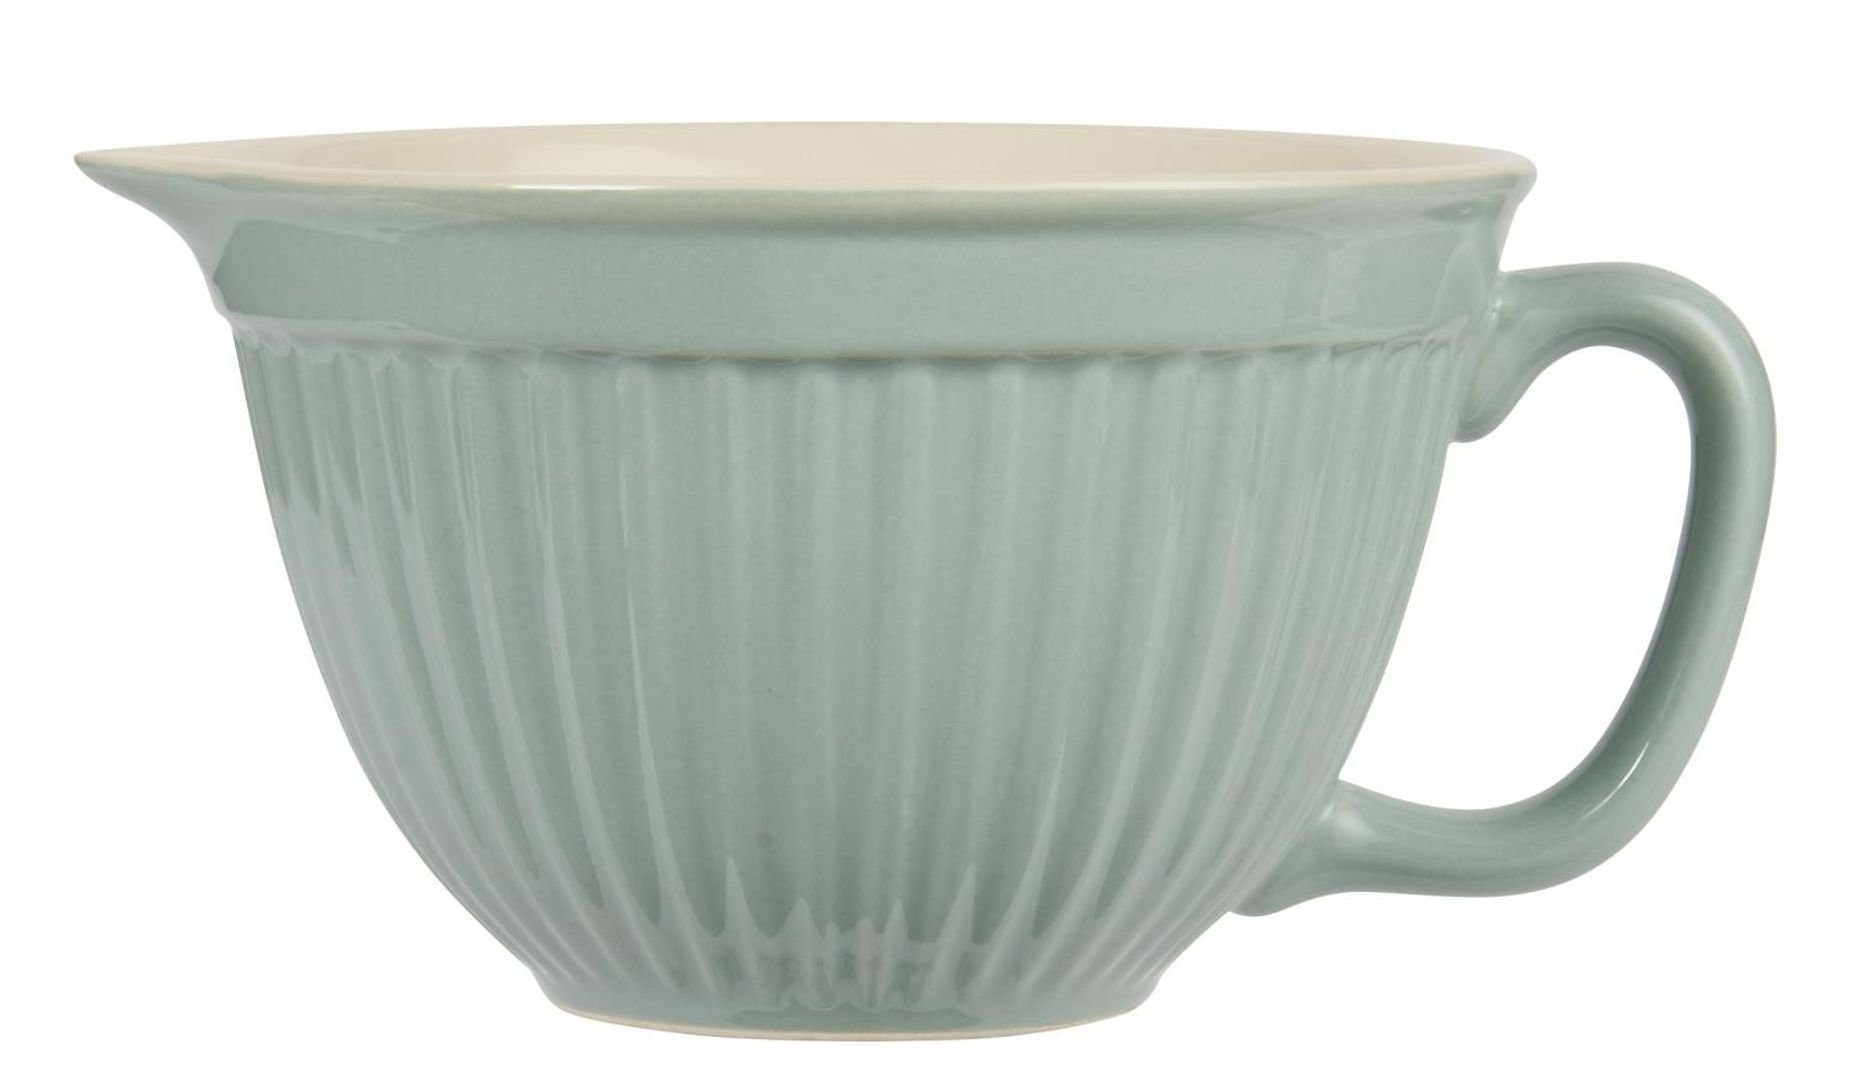 Ib Laursen Rührschüssel Farbauswahl - Laursen Rührschüssel Mynte Keramik 1,5l (2075) Schüssel, Keramik Green Tea